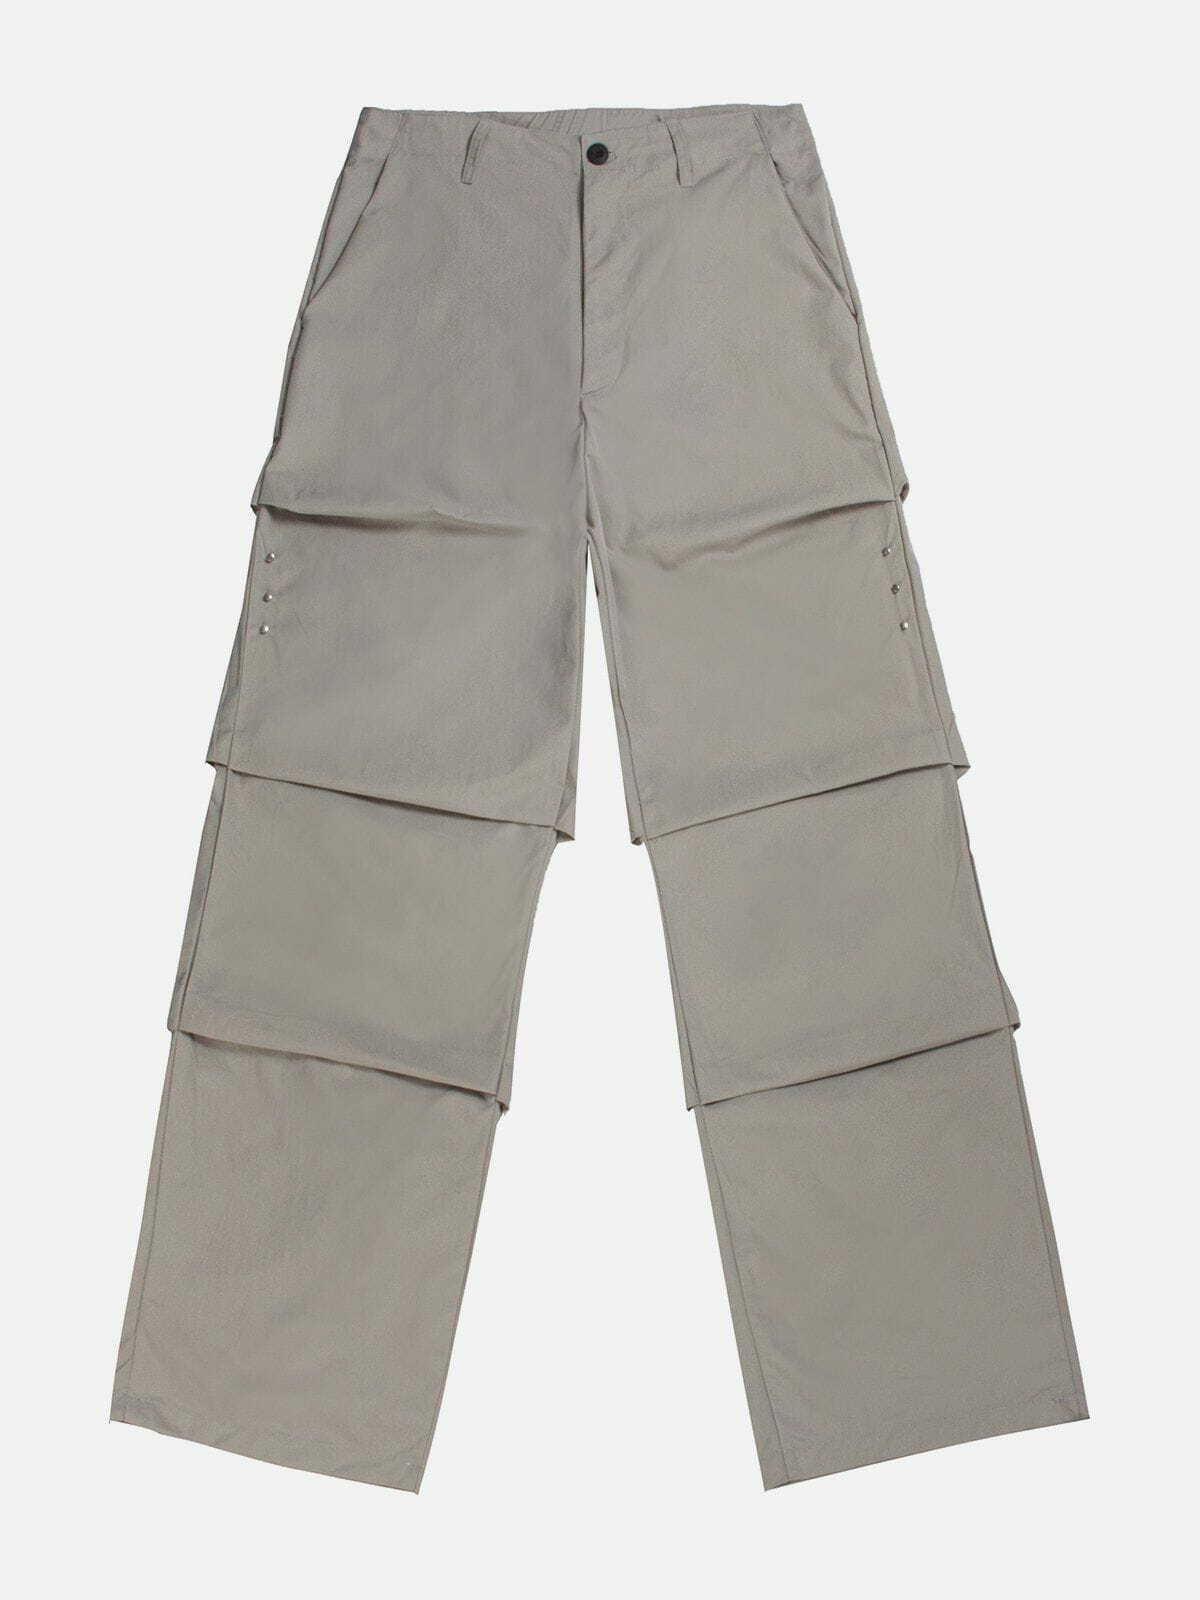 retro stacking pants edgy & vibrant streetwear 4372